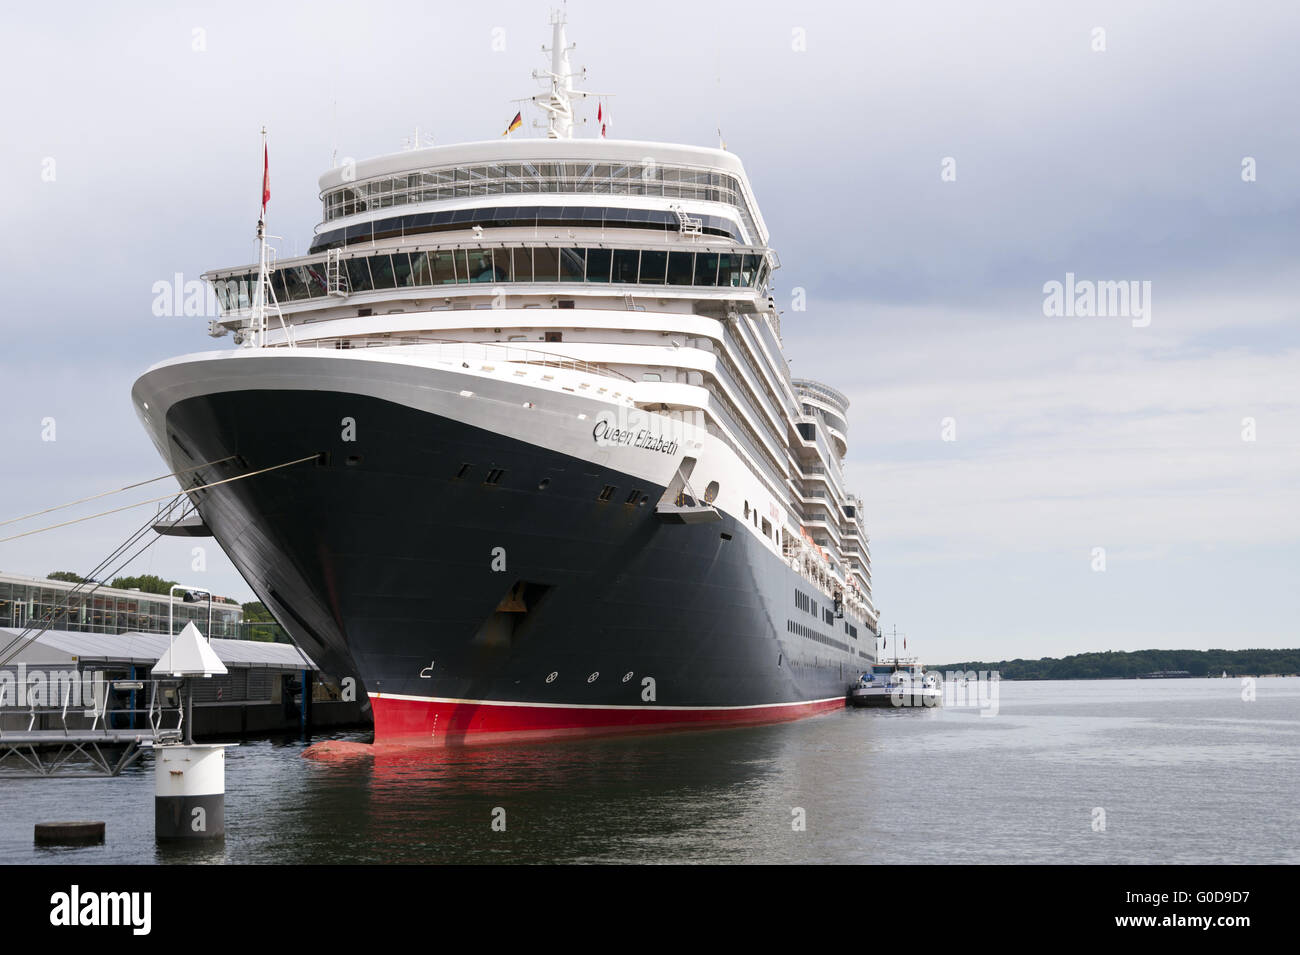 Cruise Ship Queen Elizabeth in the Port of Kiel in Stock Photo